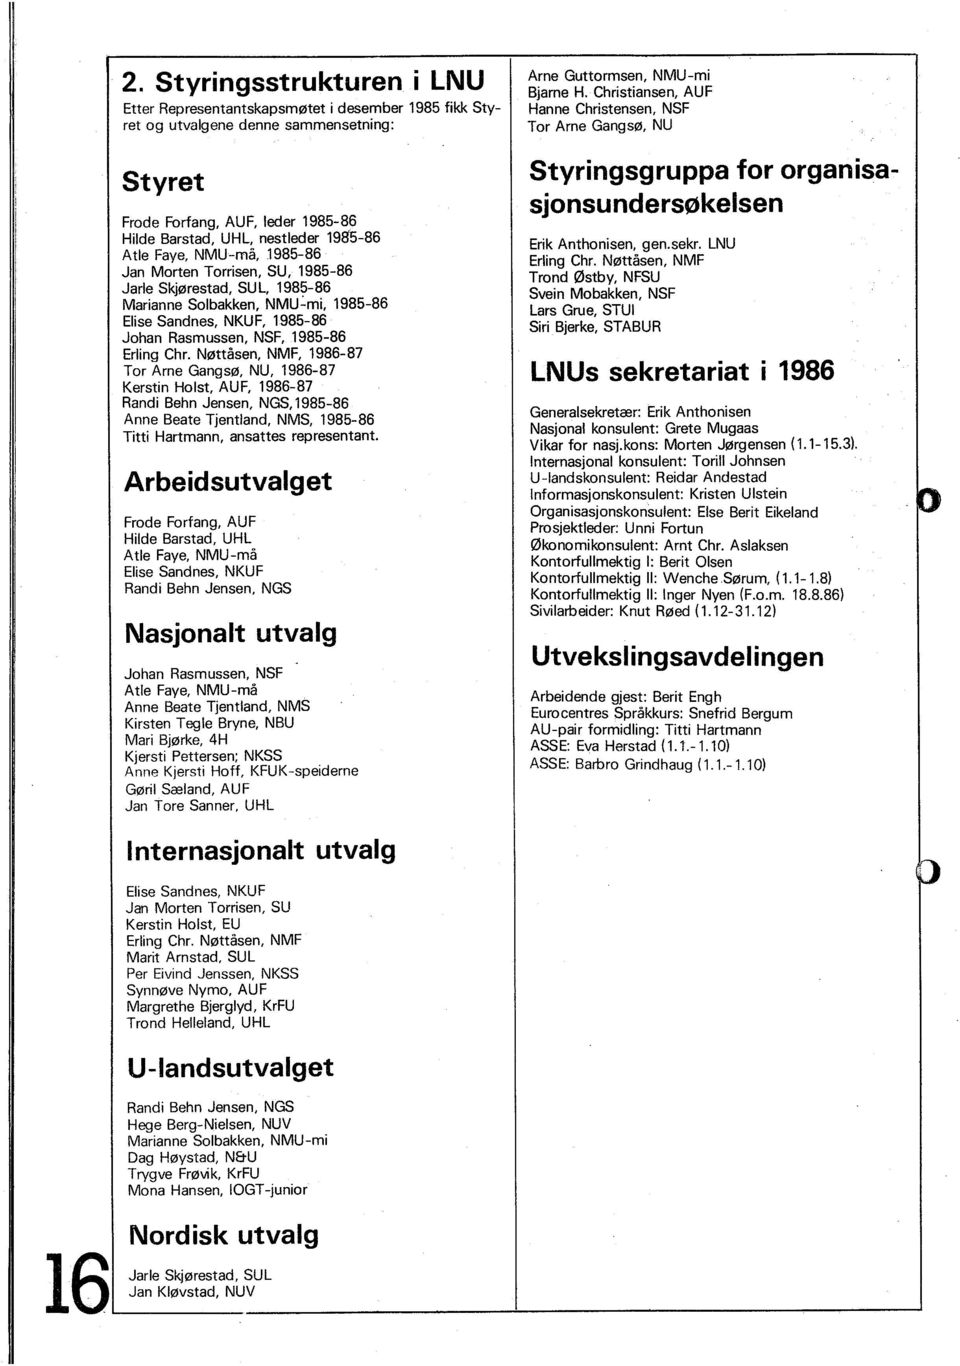 Erling Chr. Nøttåsen, NMF, 1986-87 Tor Arne Gangsø, NU, 1986-87 Kerstin Holst, AUF, 1986-87 Randi Behn Jensen, NGS, 1985-86 Anne Beate Tjentland, NMS, 1985-86 Titti Hartmann, ansattes representant.